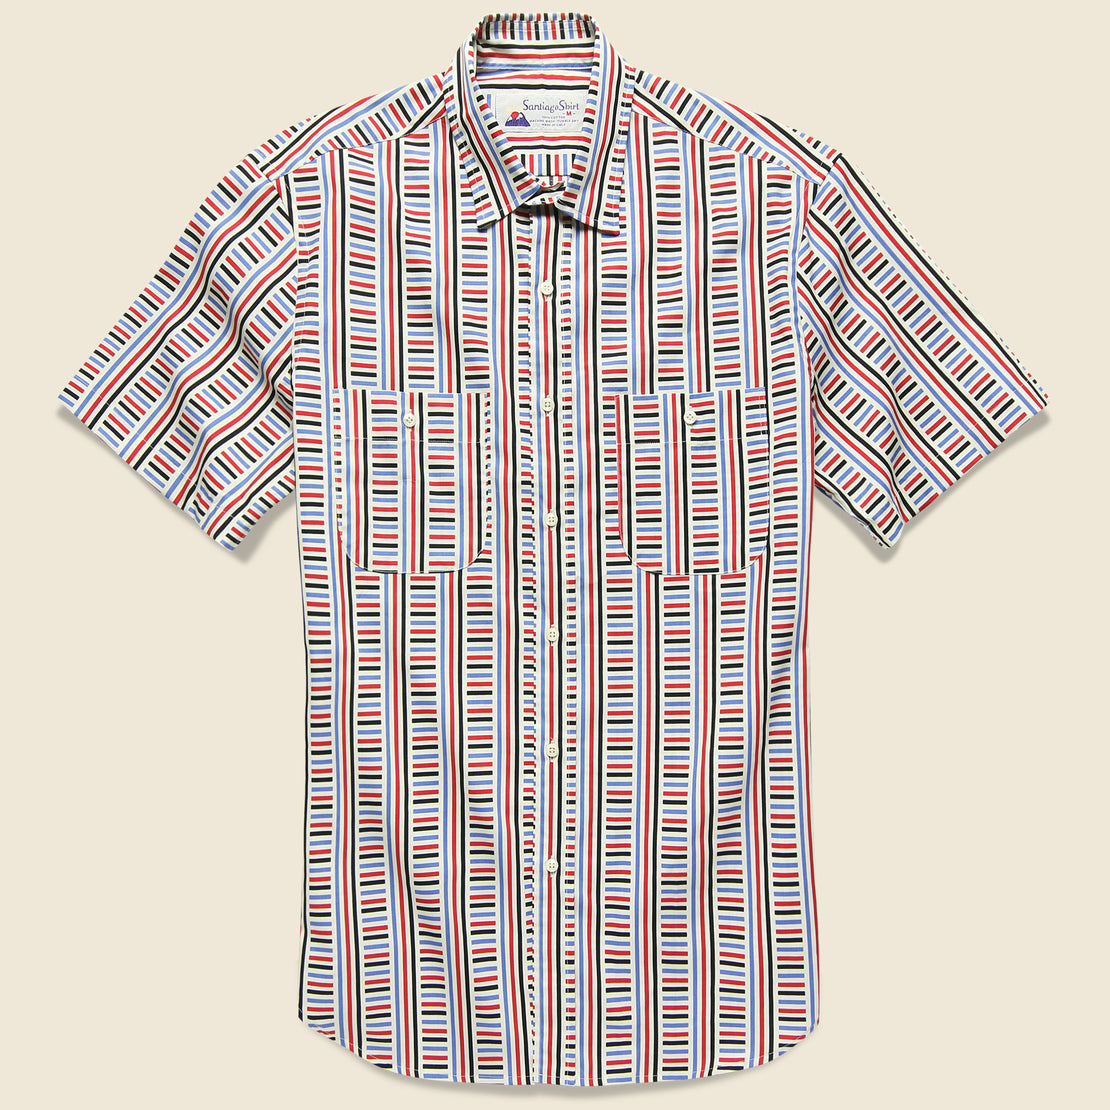 Gitman Vintage Santiago Shirt Co. - Selknam Stripe Shirt